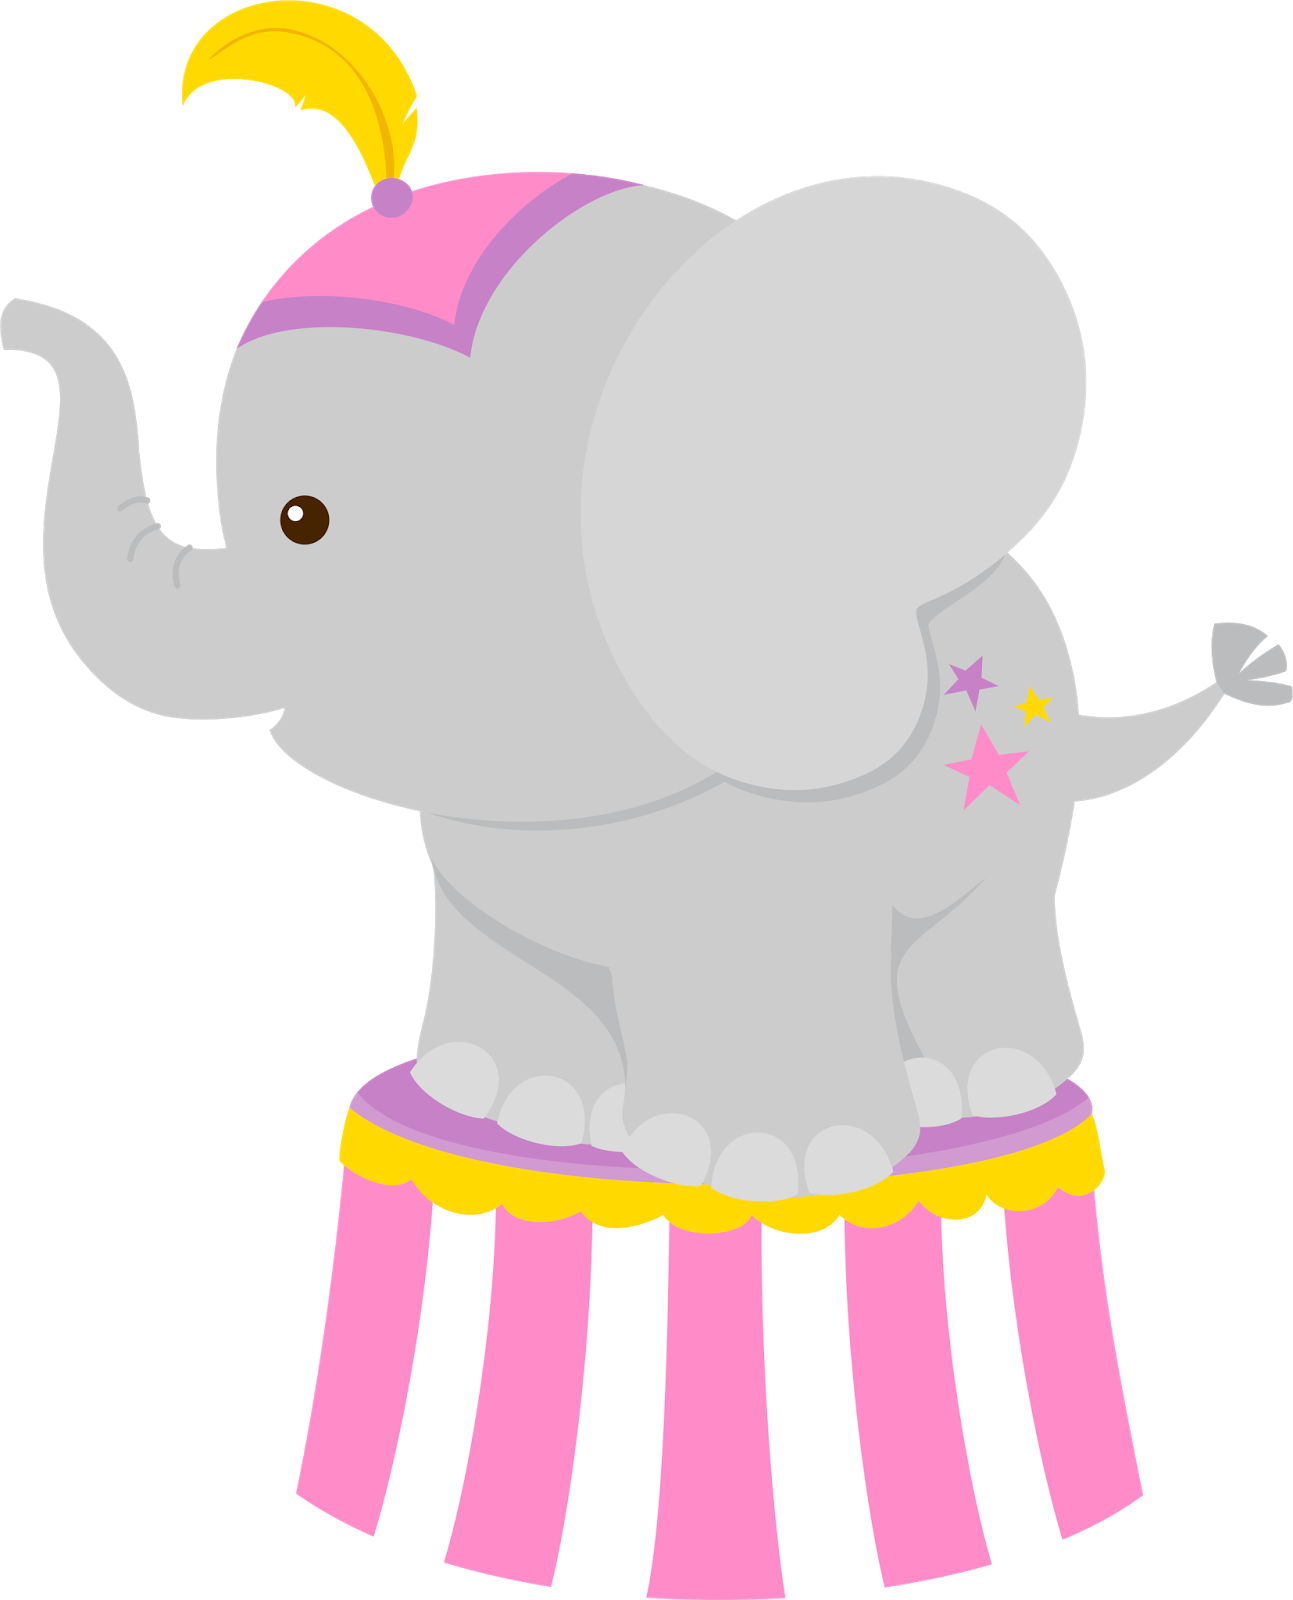 clipart circus elephant - photo #41